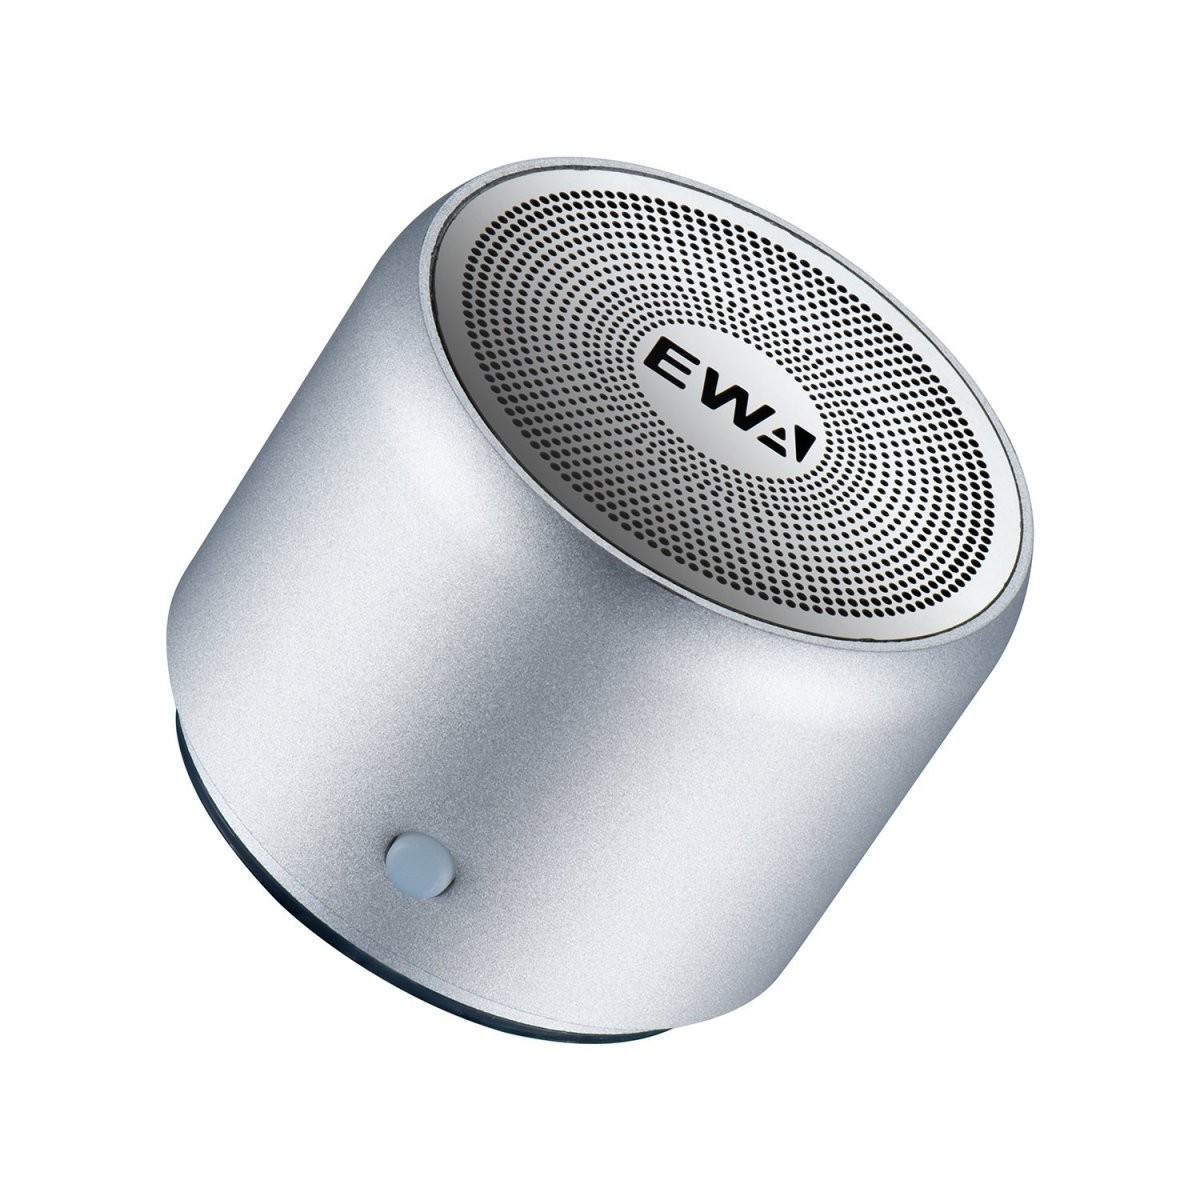 EWA EWA ワイヤレス Bluetoothコンパクトスピーカー A106 シルバー スマホ対応スピーカーの商品画像